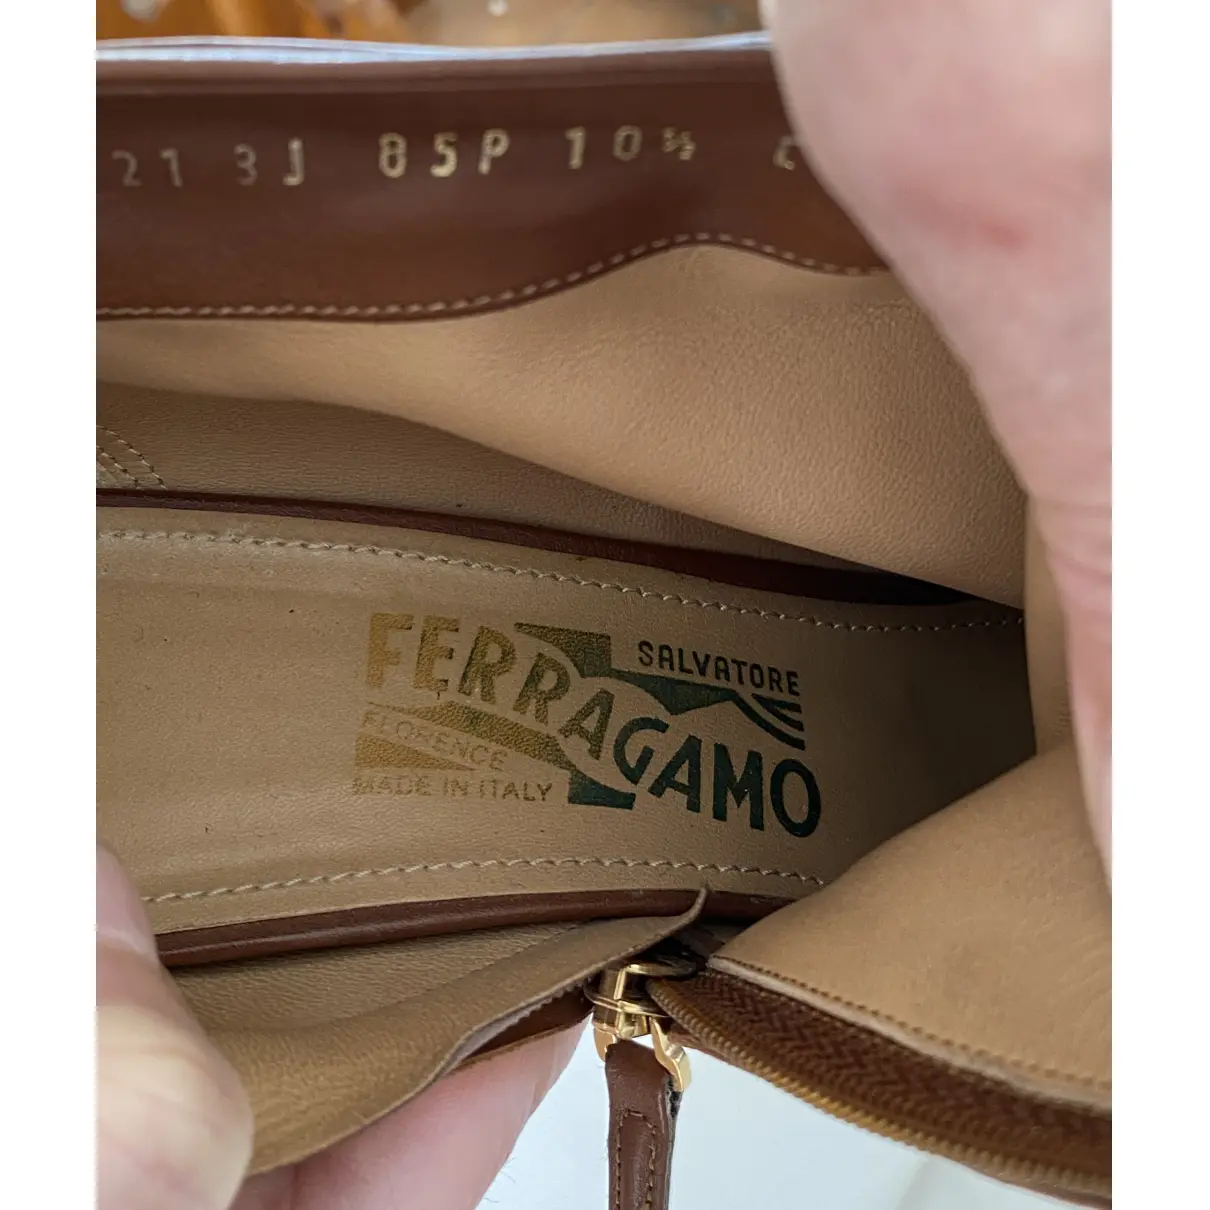 Buy Salvatore Ferragamo Leather ankle boots online